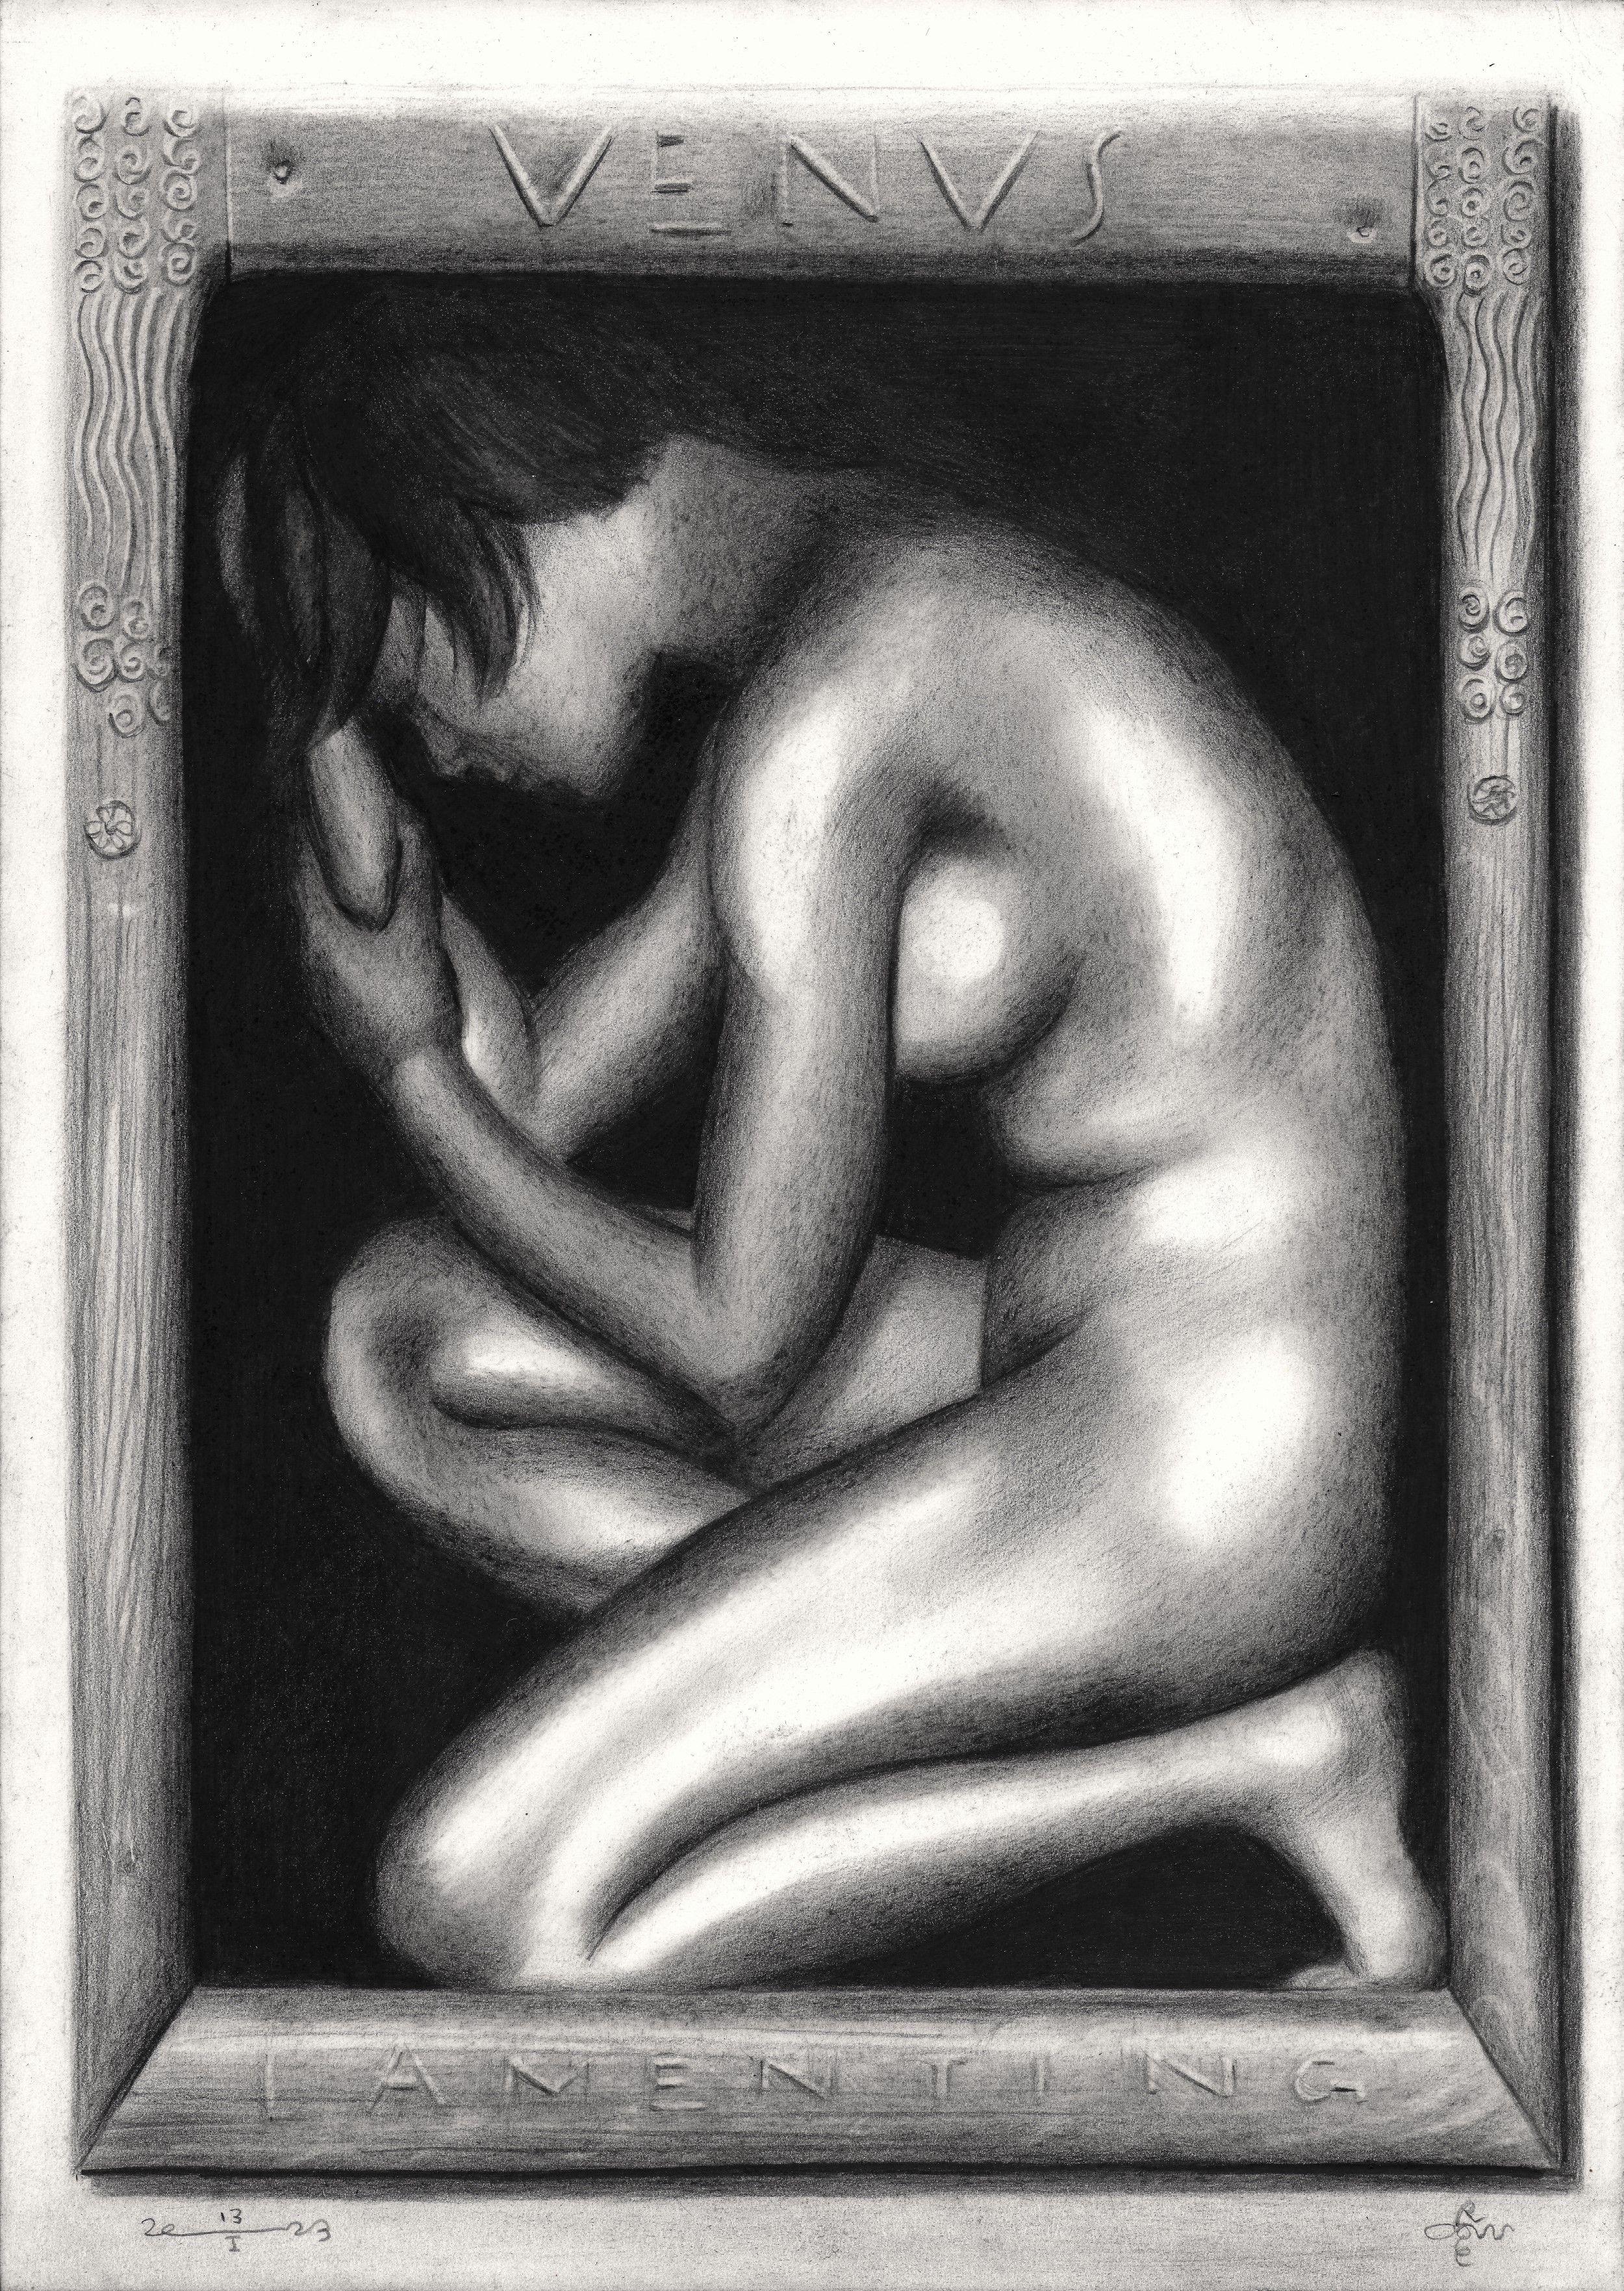 Venus Lamenting - 13-01-23, dessin, crayon/crayon coloré sur papier